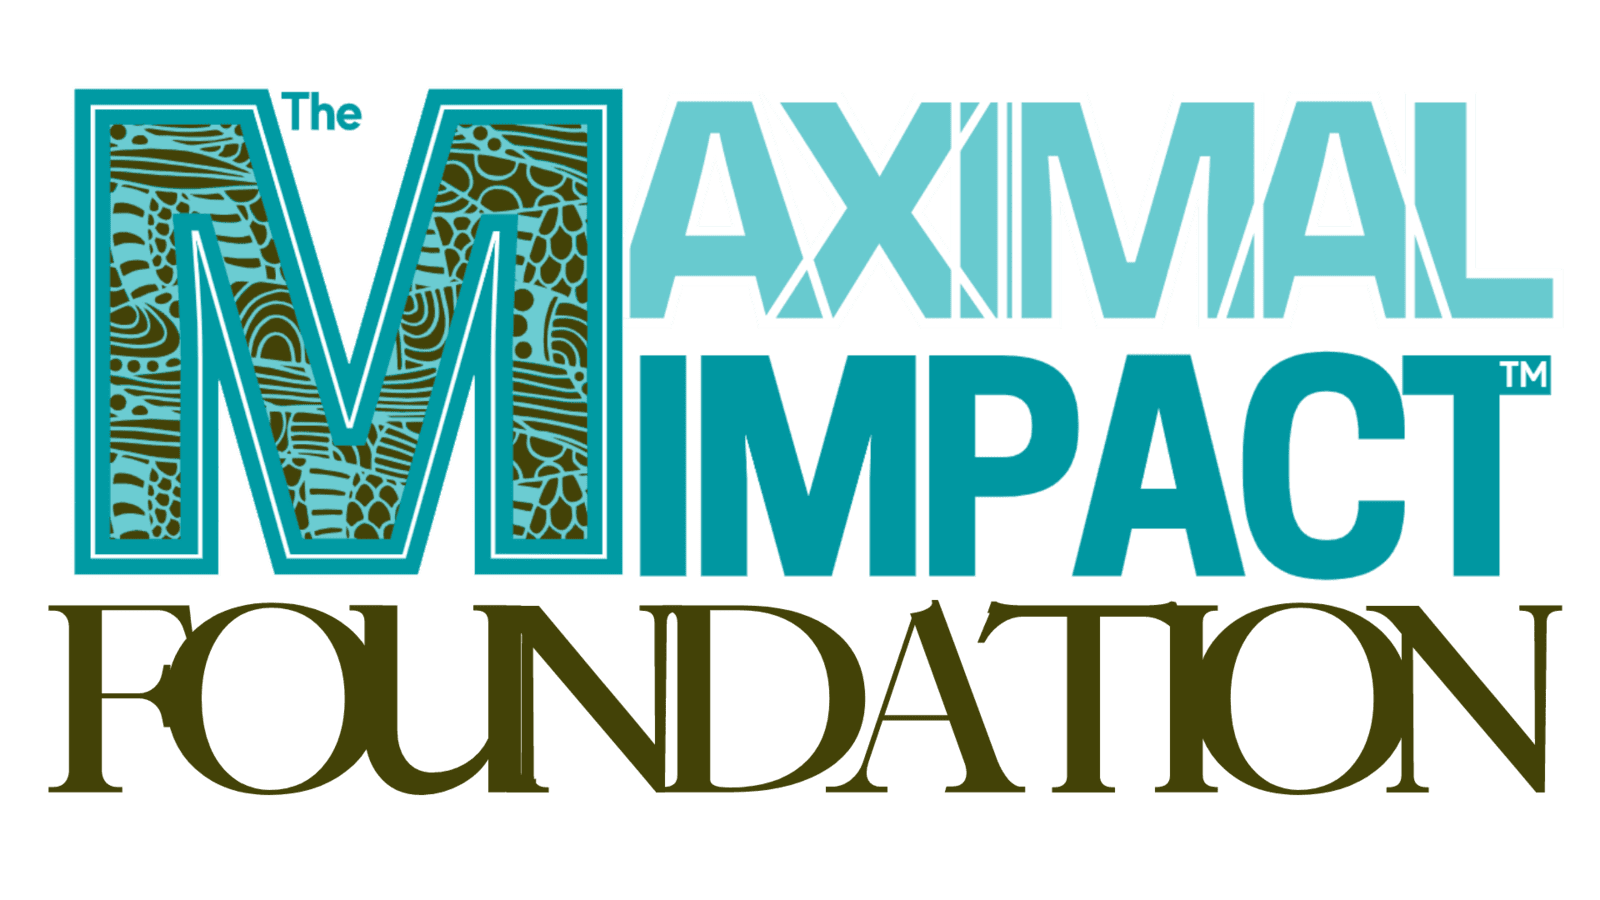 The Maximal Impact Foundation